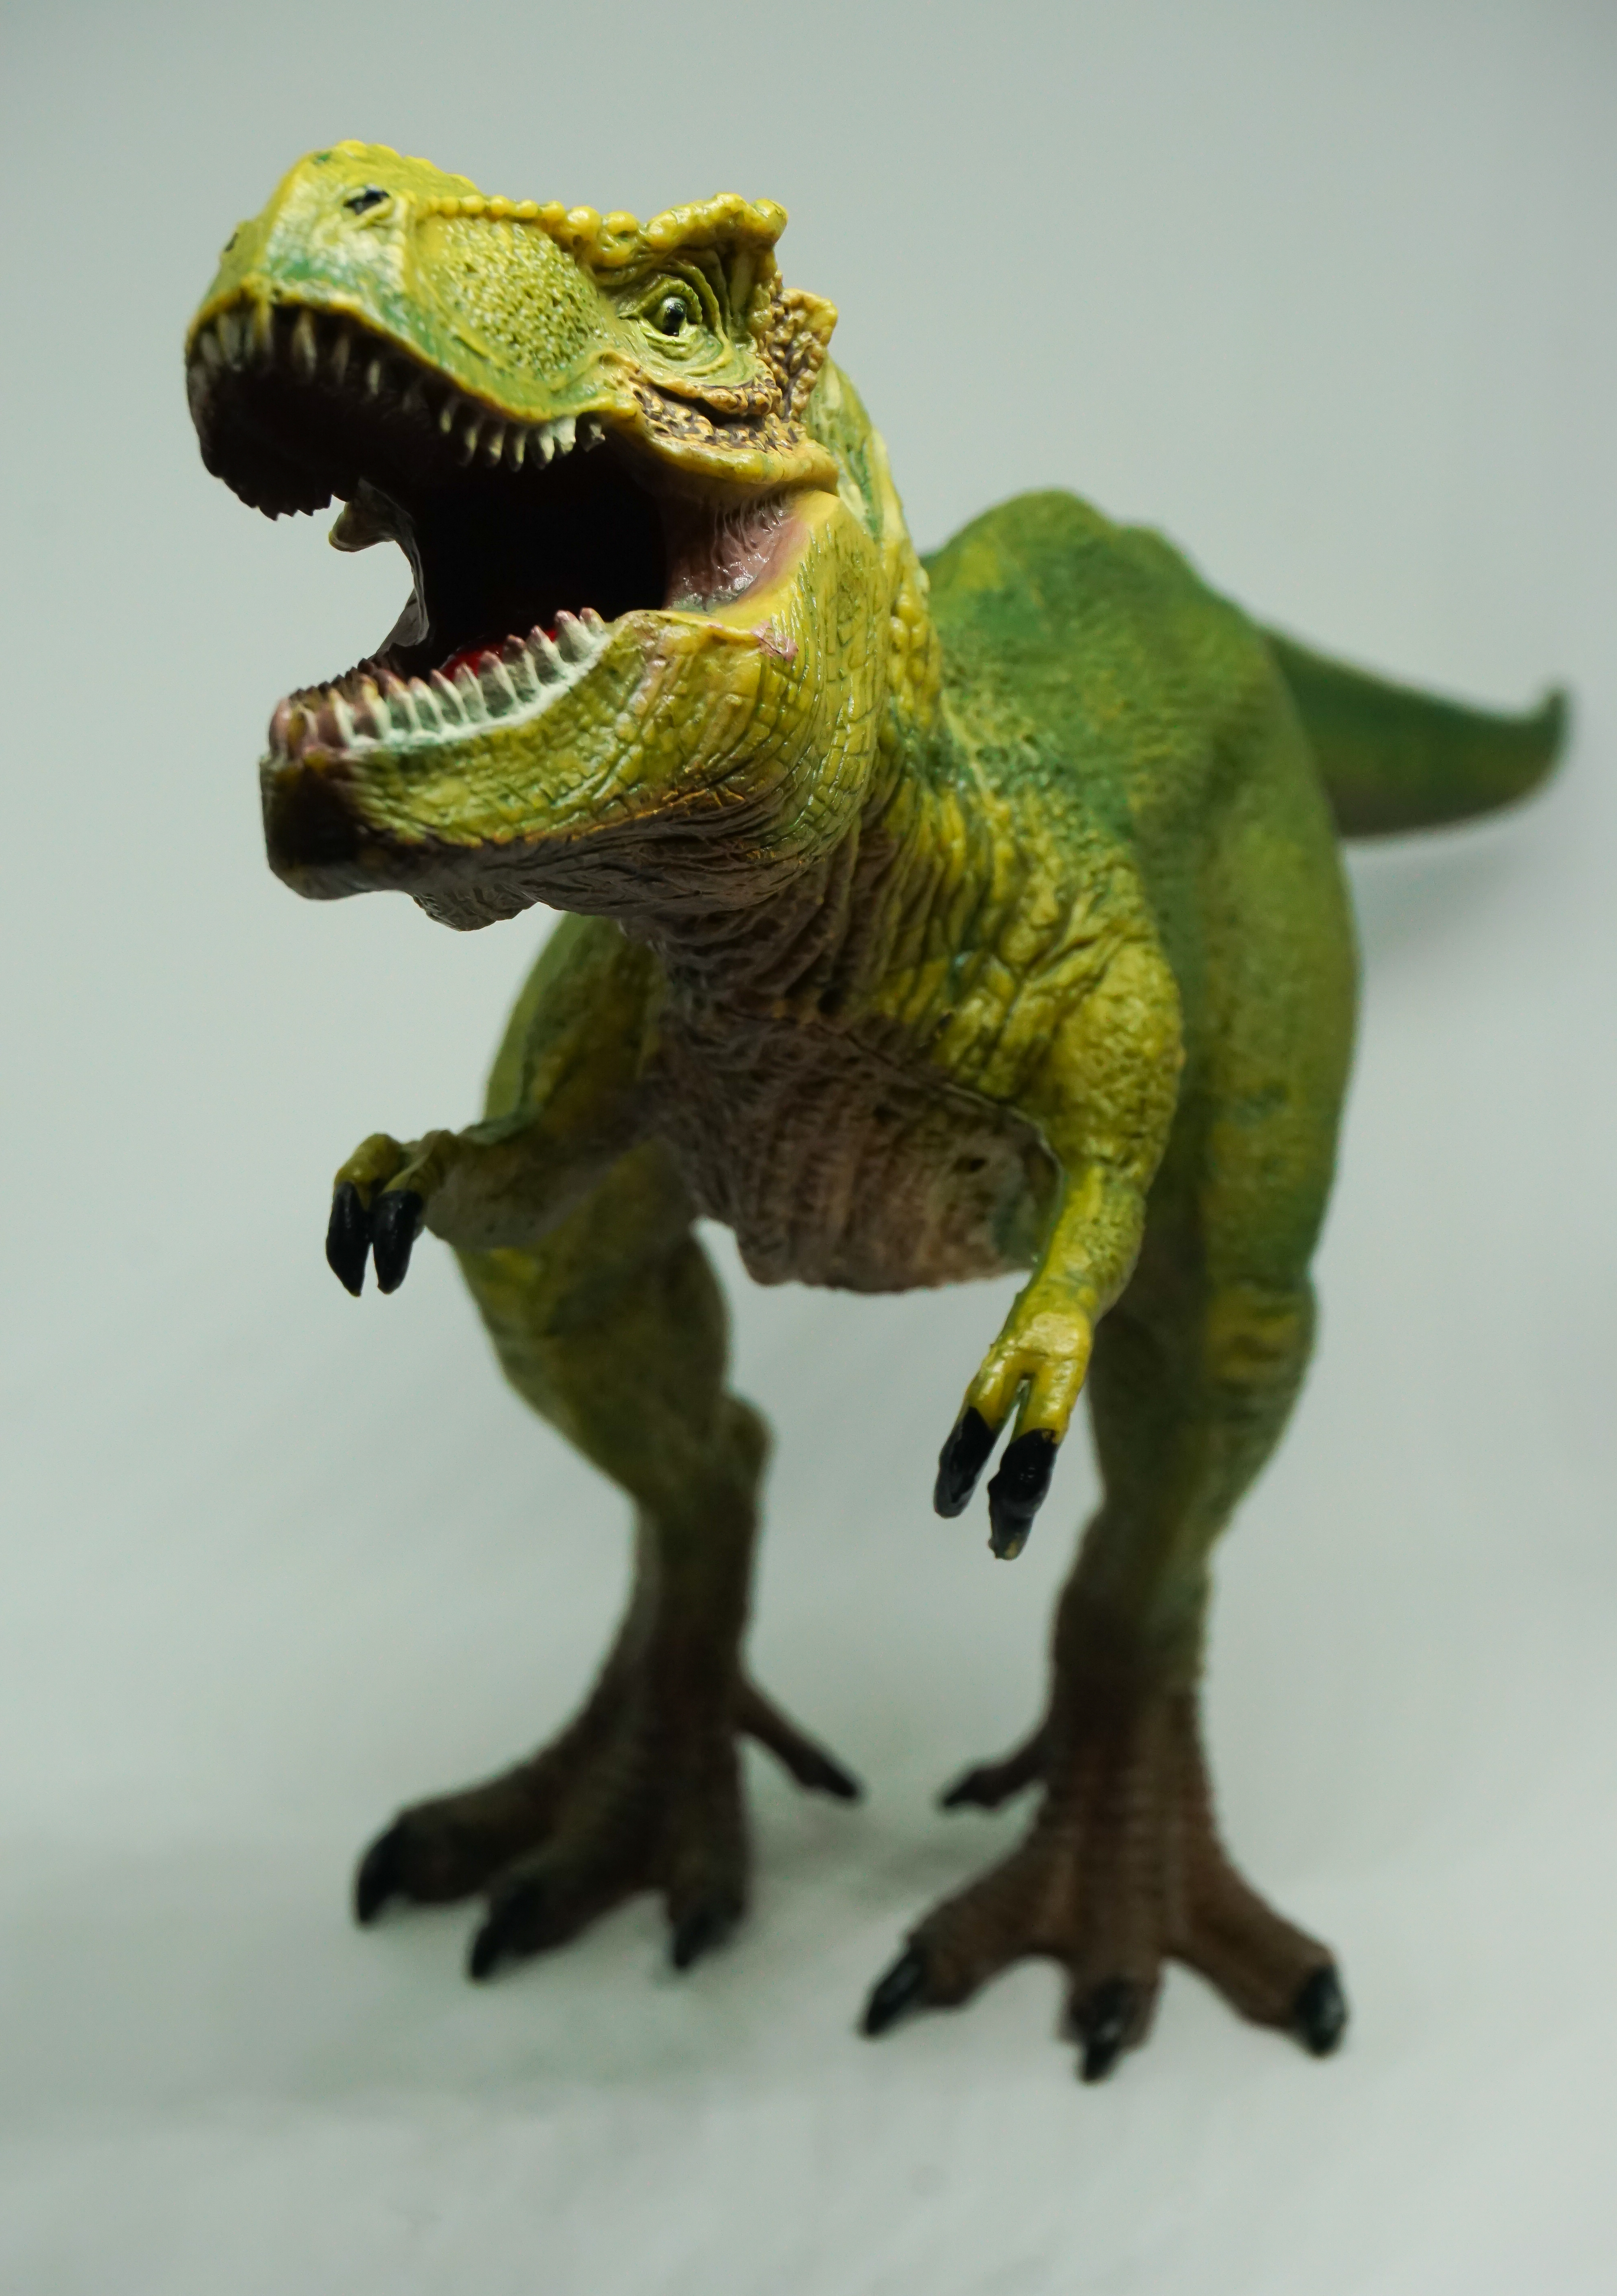 Toy tyrannosaurus rex showing teeth.